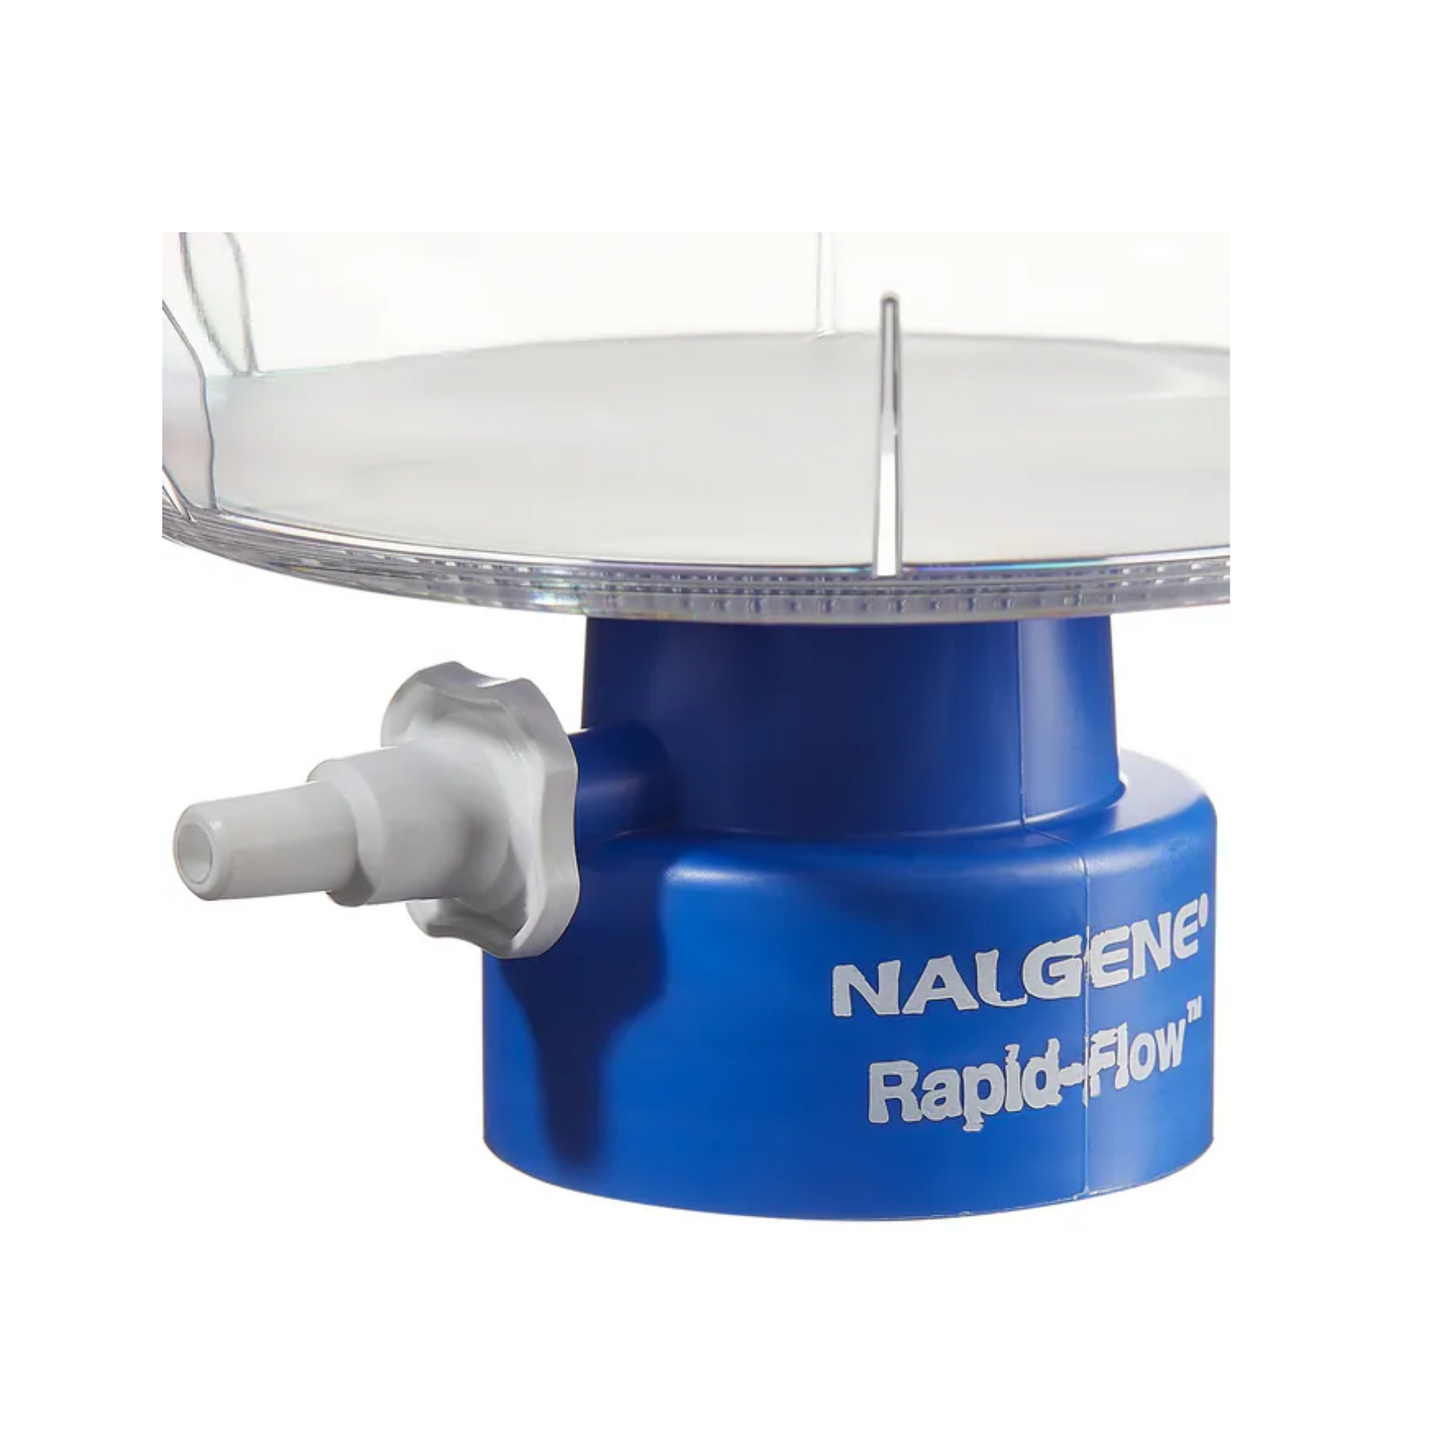 1000ml Nalgene Rapid-Flow Sterile Disposable Filter Unit, 0.2 μm aPES membrane, Case of 12 (567-0020)